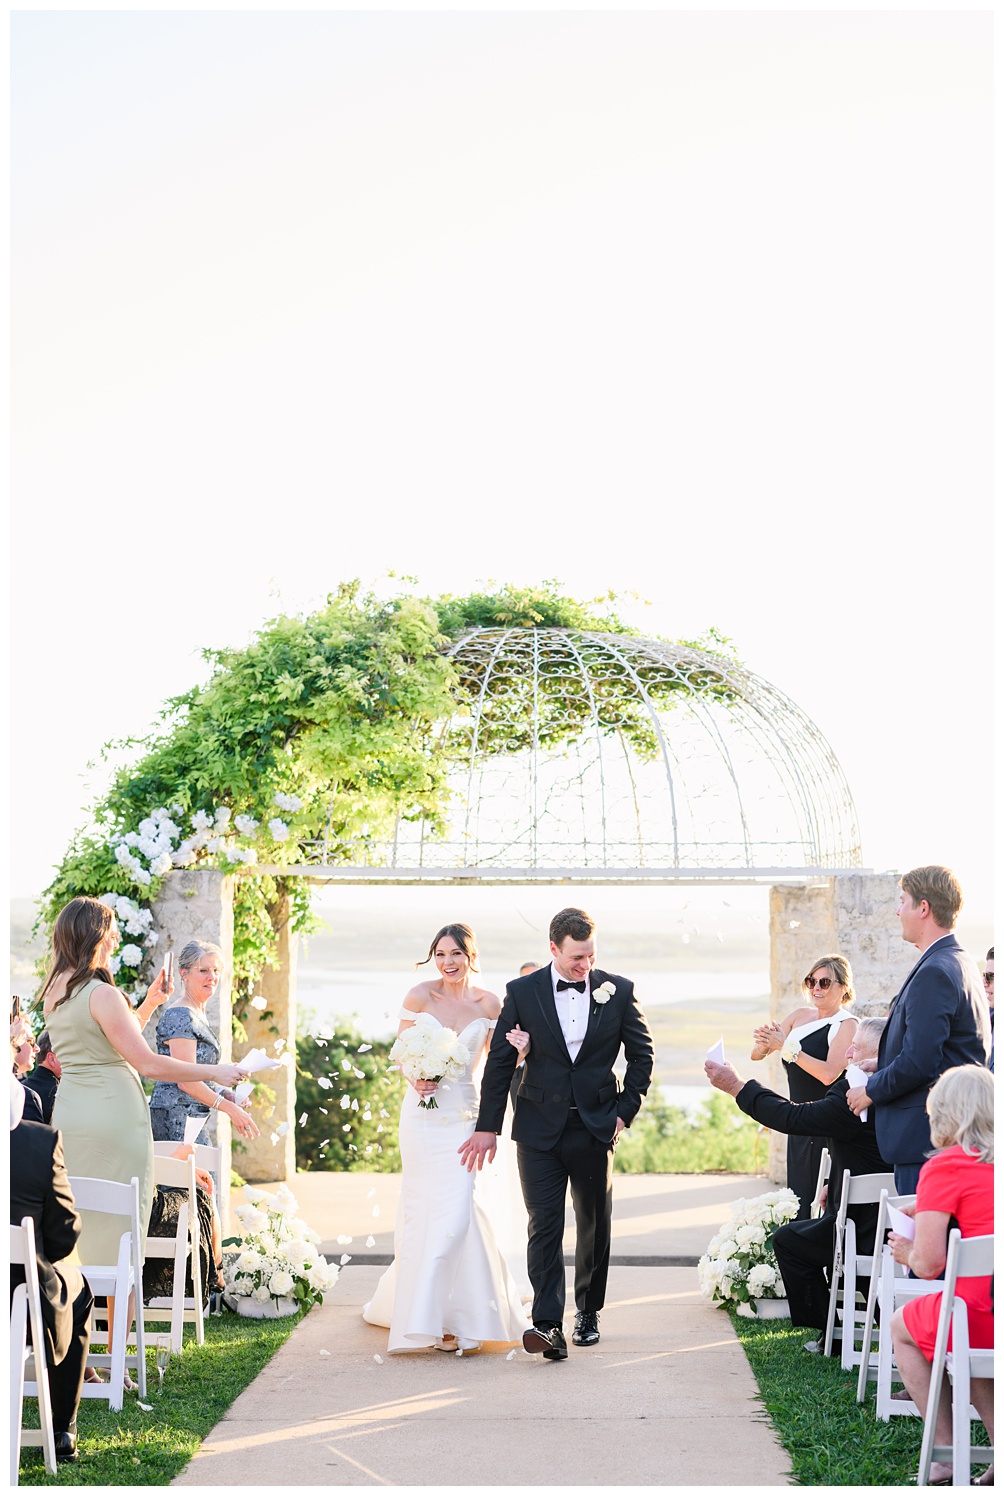 Rose petal toss at wedding ceremony at Vintage Villas overlooking lake travis in Austin Texas